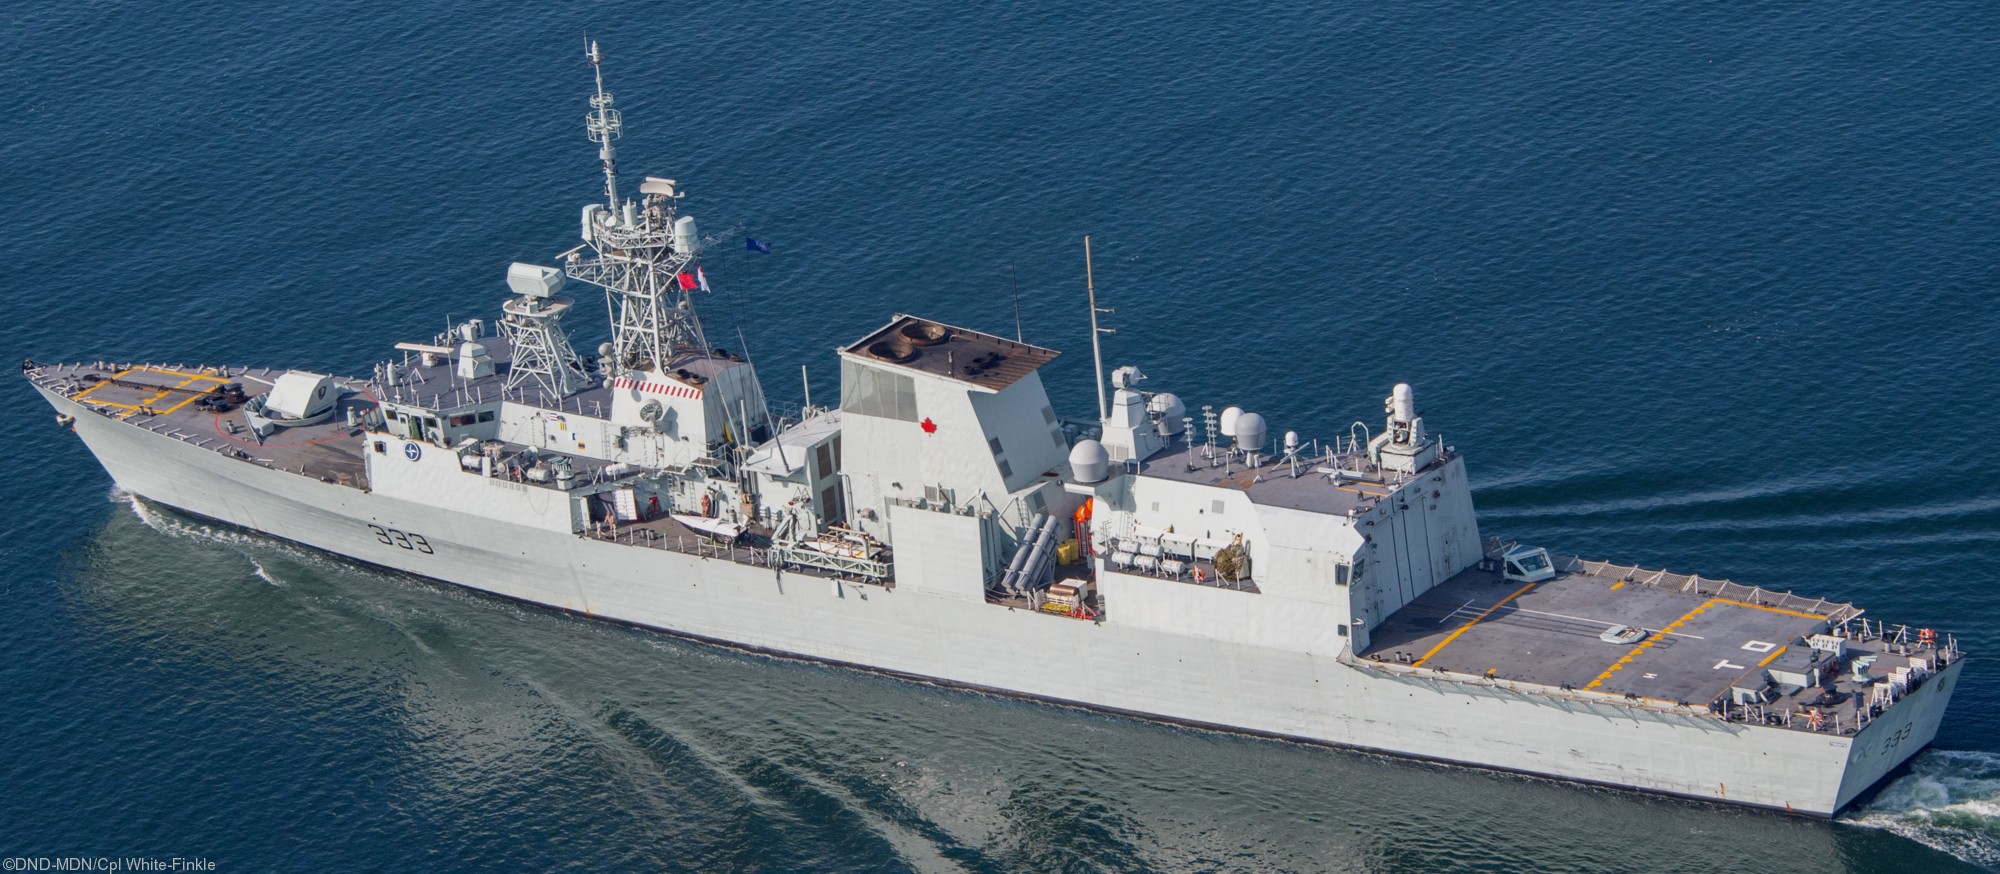 ffh-333 hmcs toronto halifax class helicopter patrol frigate ncsm royal canadian navy 04